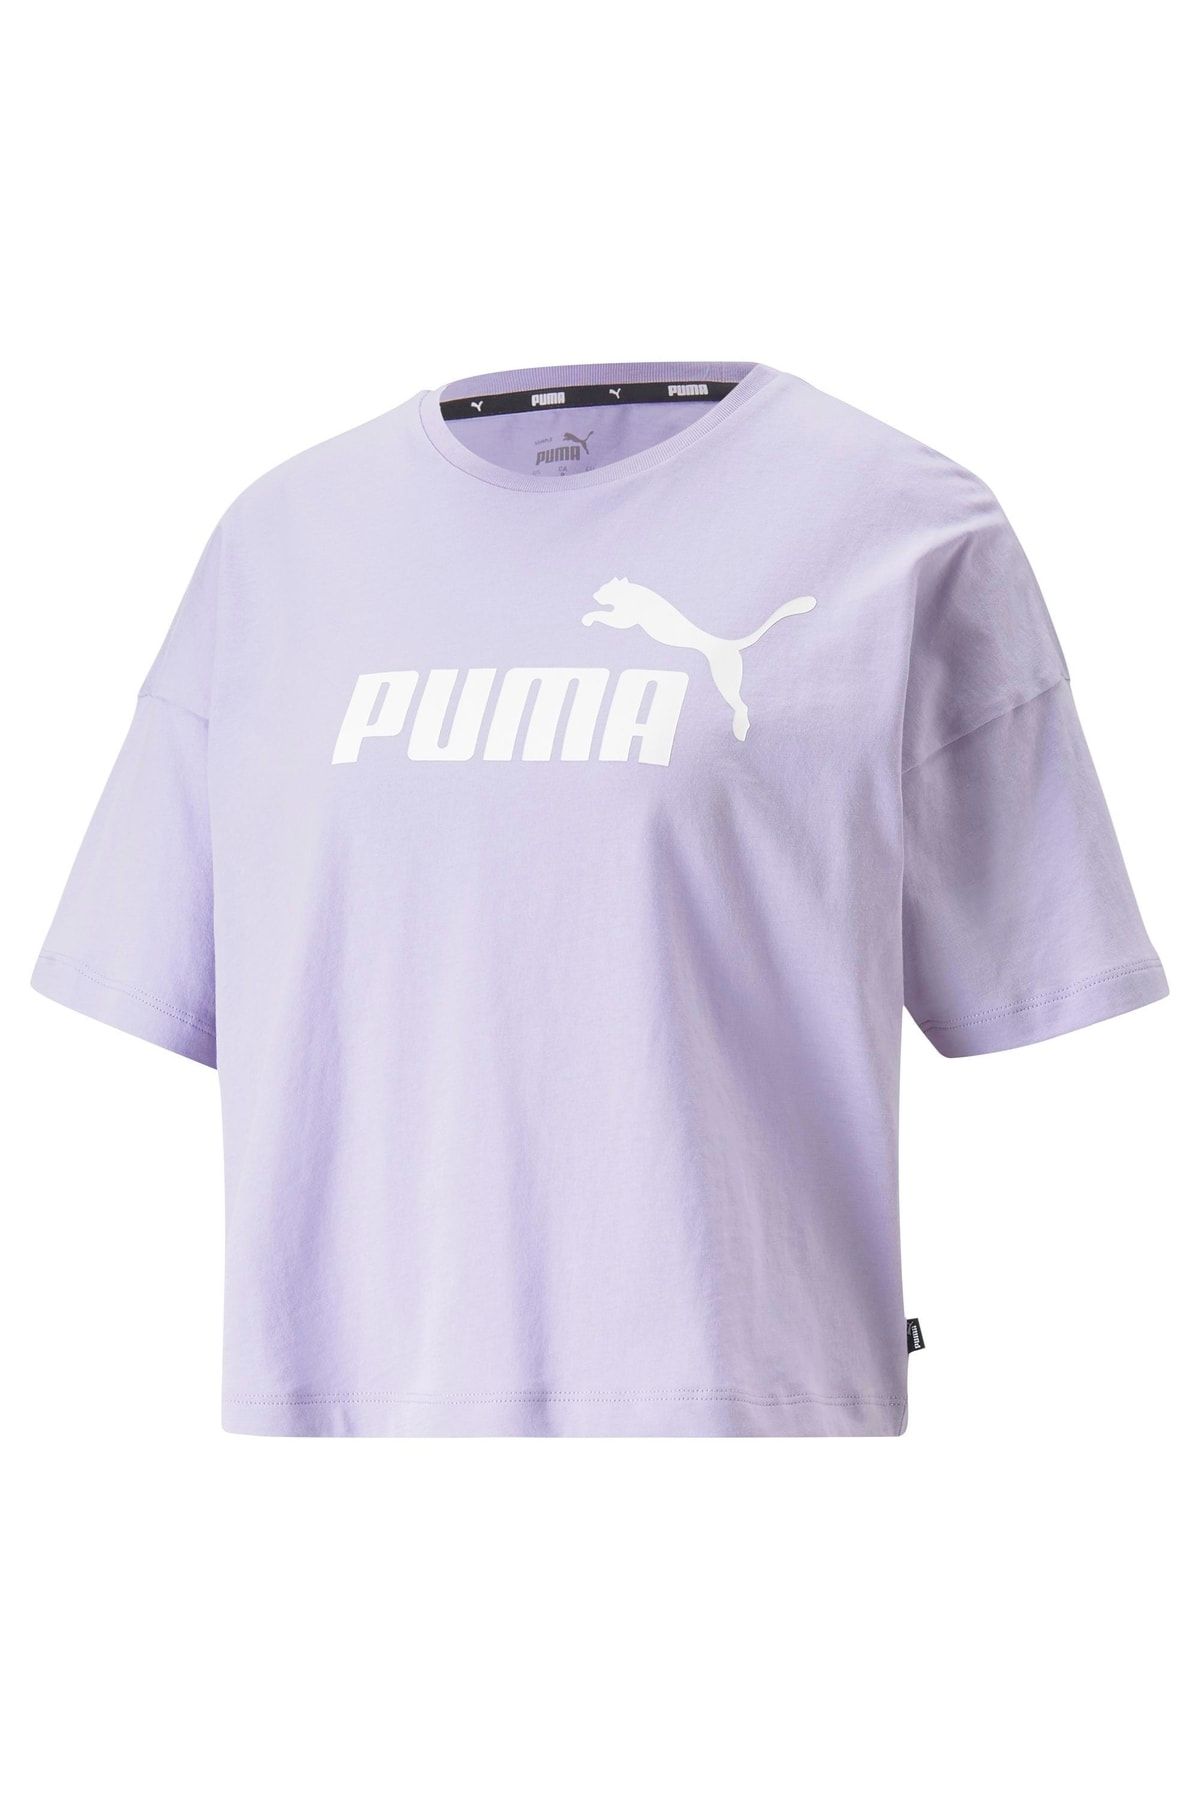 Tee Cropped Lilac Short Puma Sleeve - Women\'s Trendyol Logo Ess T-shirt